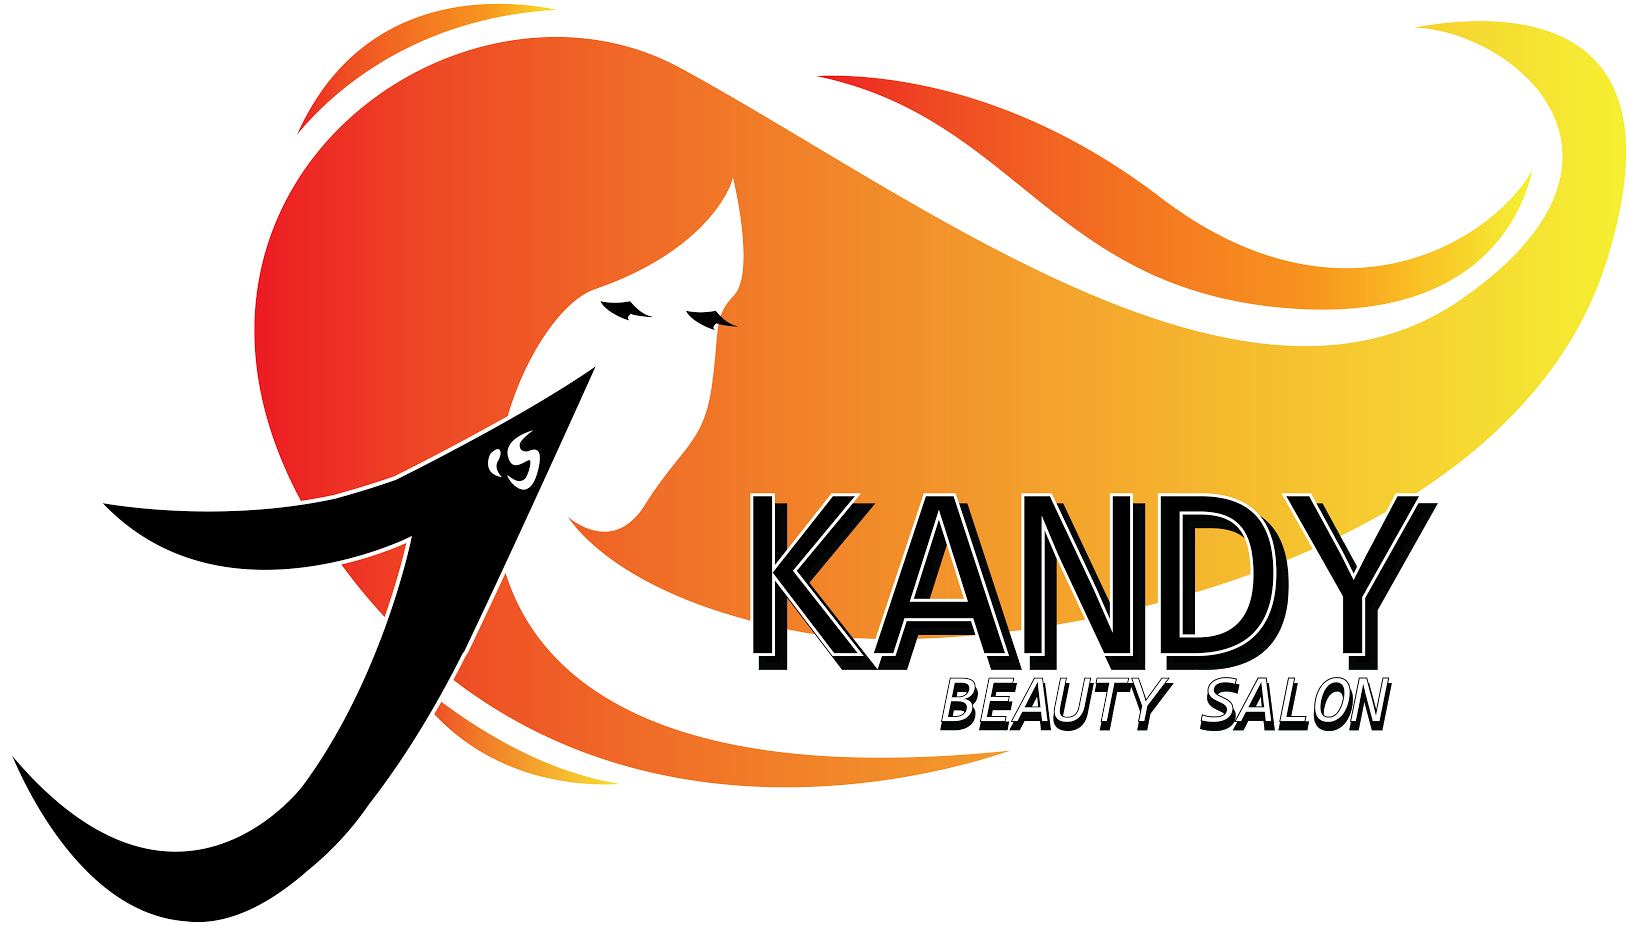 Js Kandy Salon Book Now - Graphic Design (1629x926)